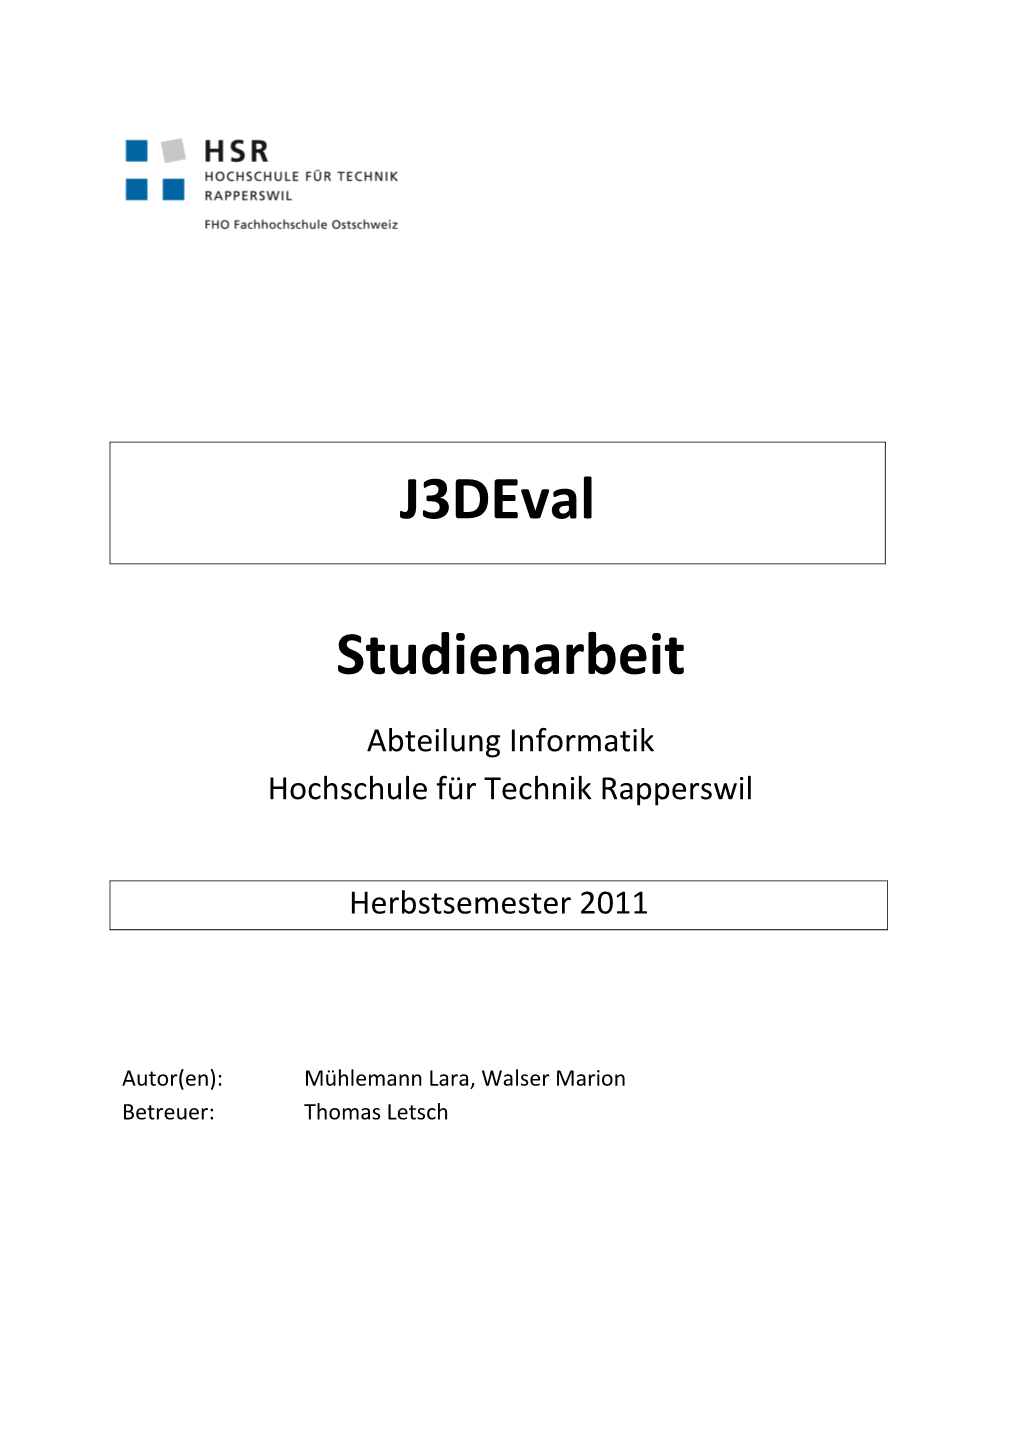 J3deval Studienarbeit